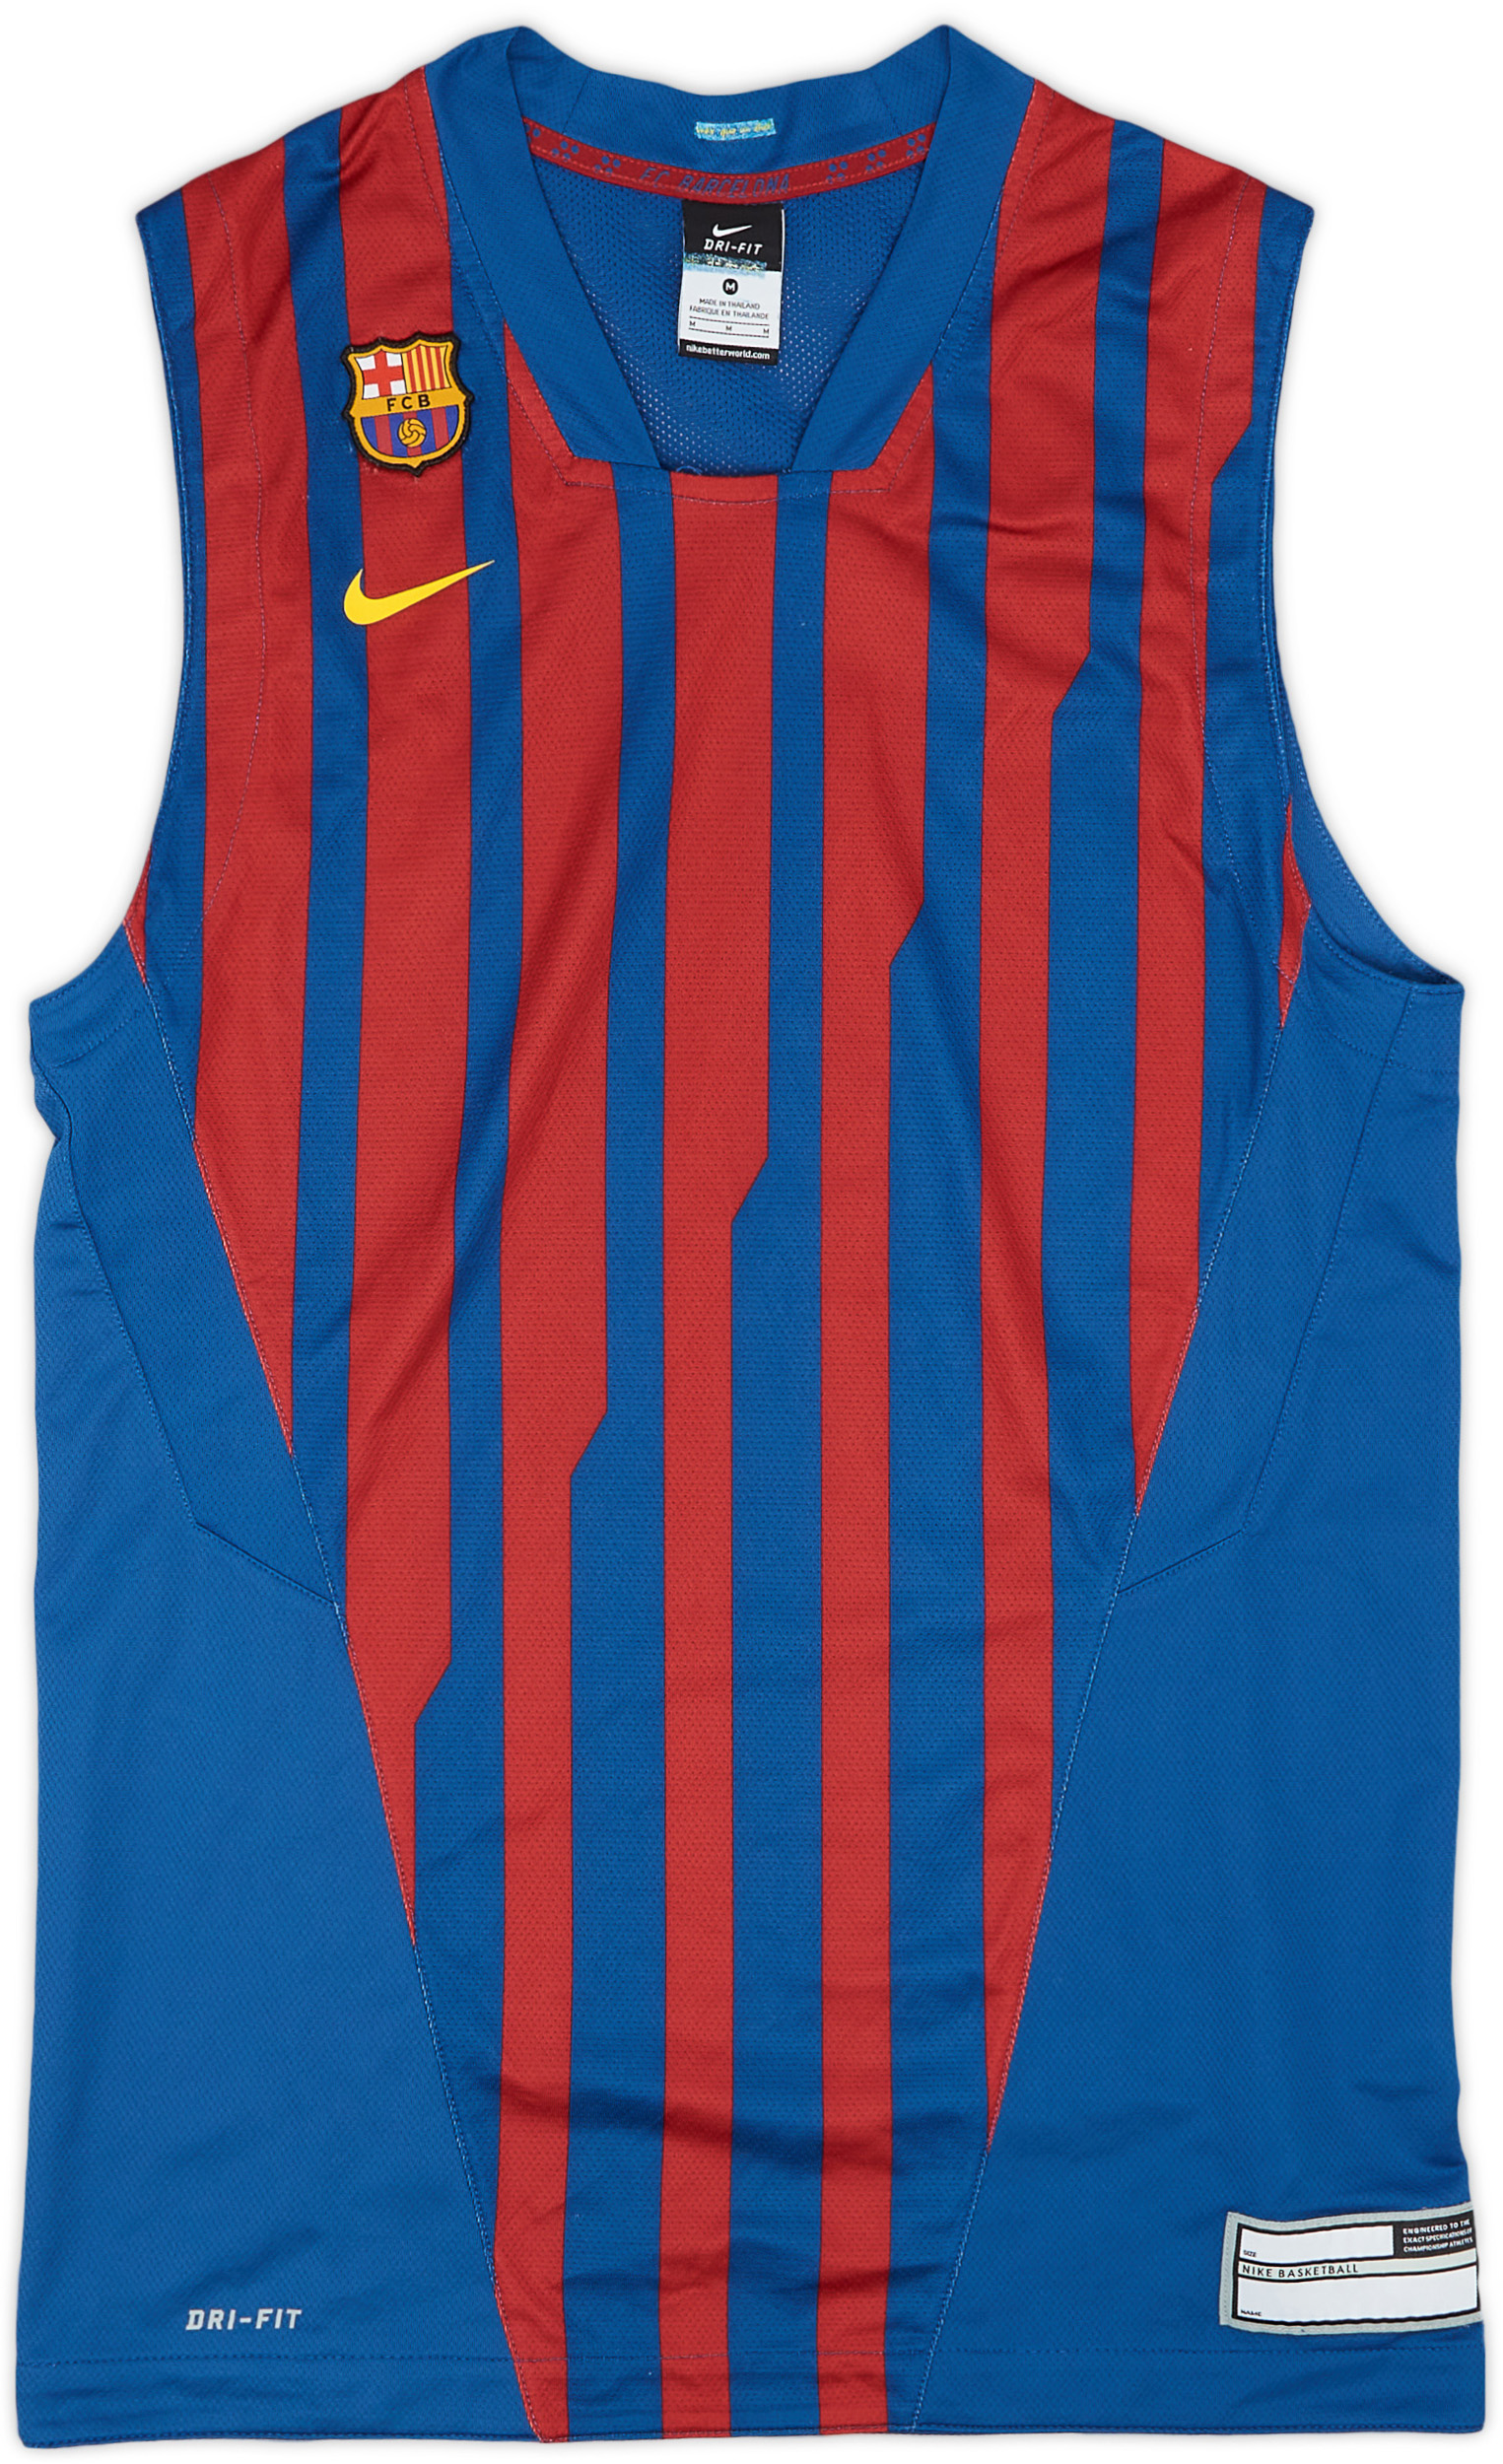 2011-12 Barcelona Nike Basketball Jersey - 8/10 - ()